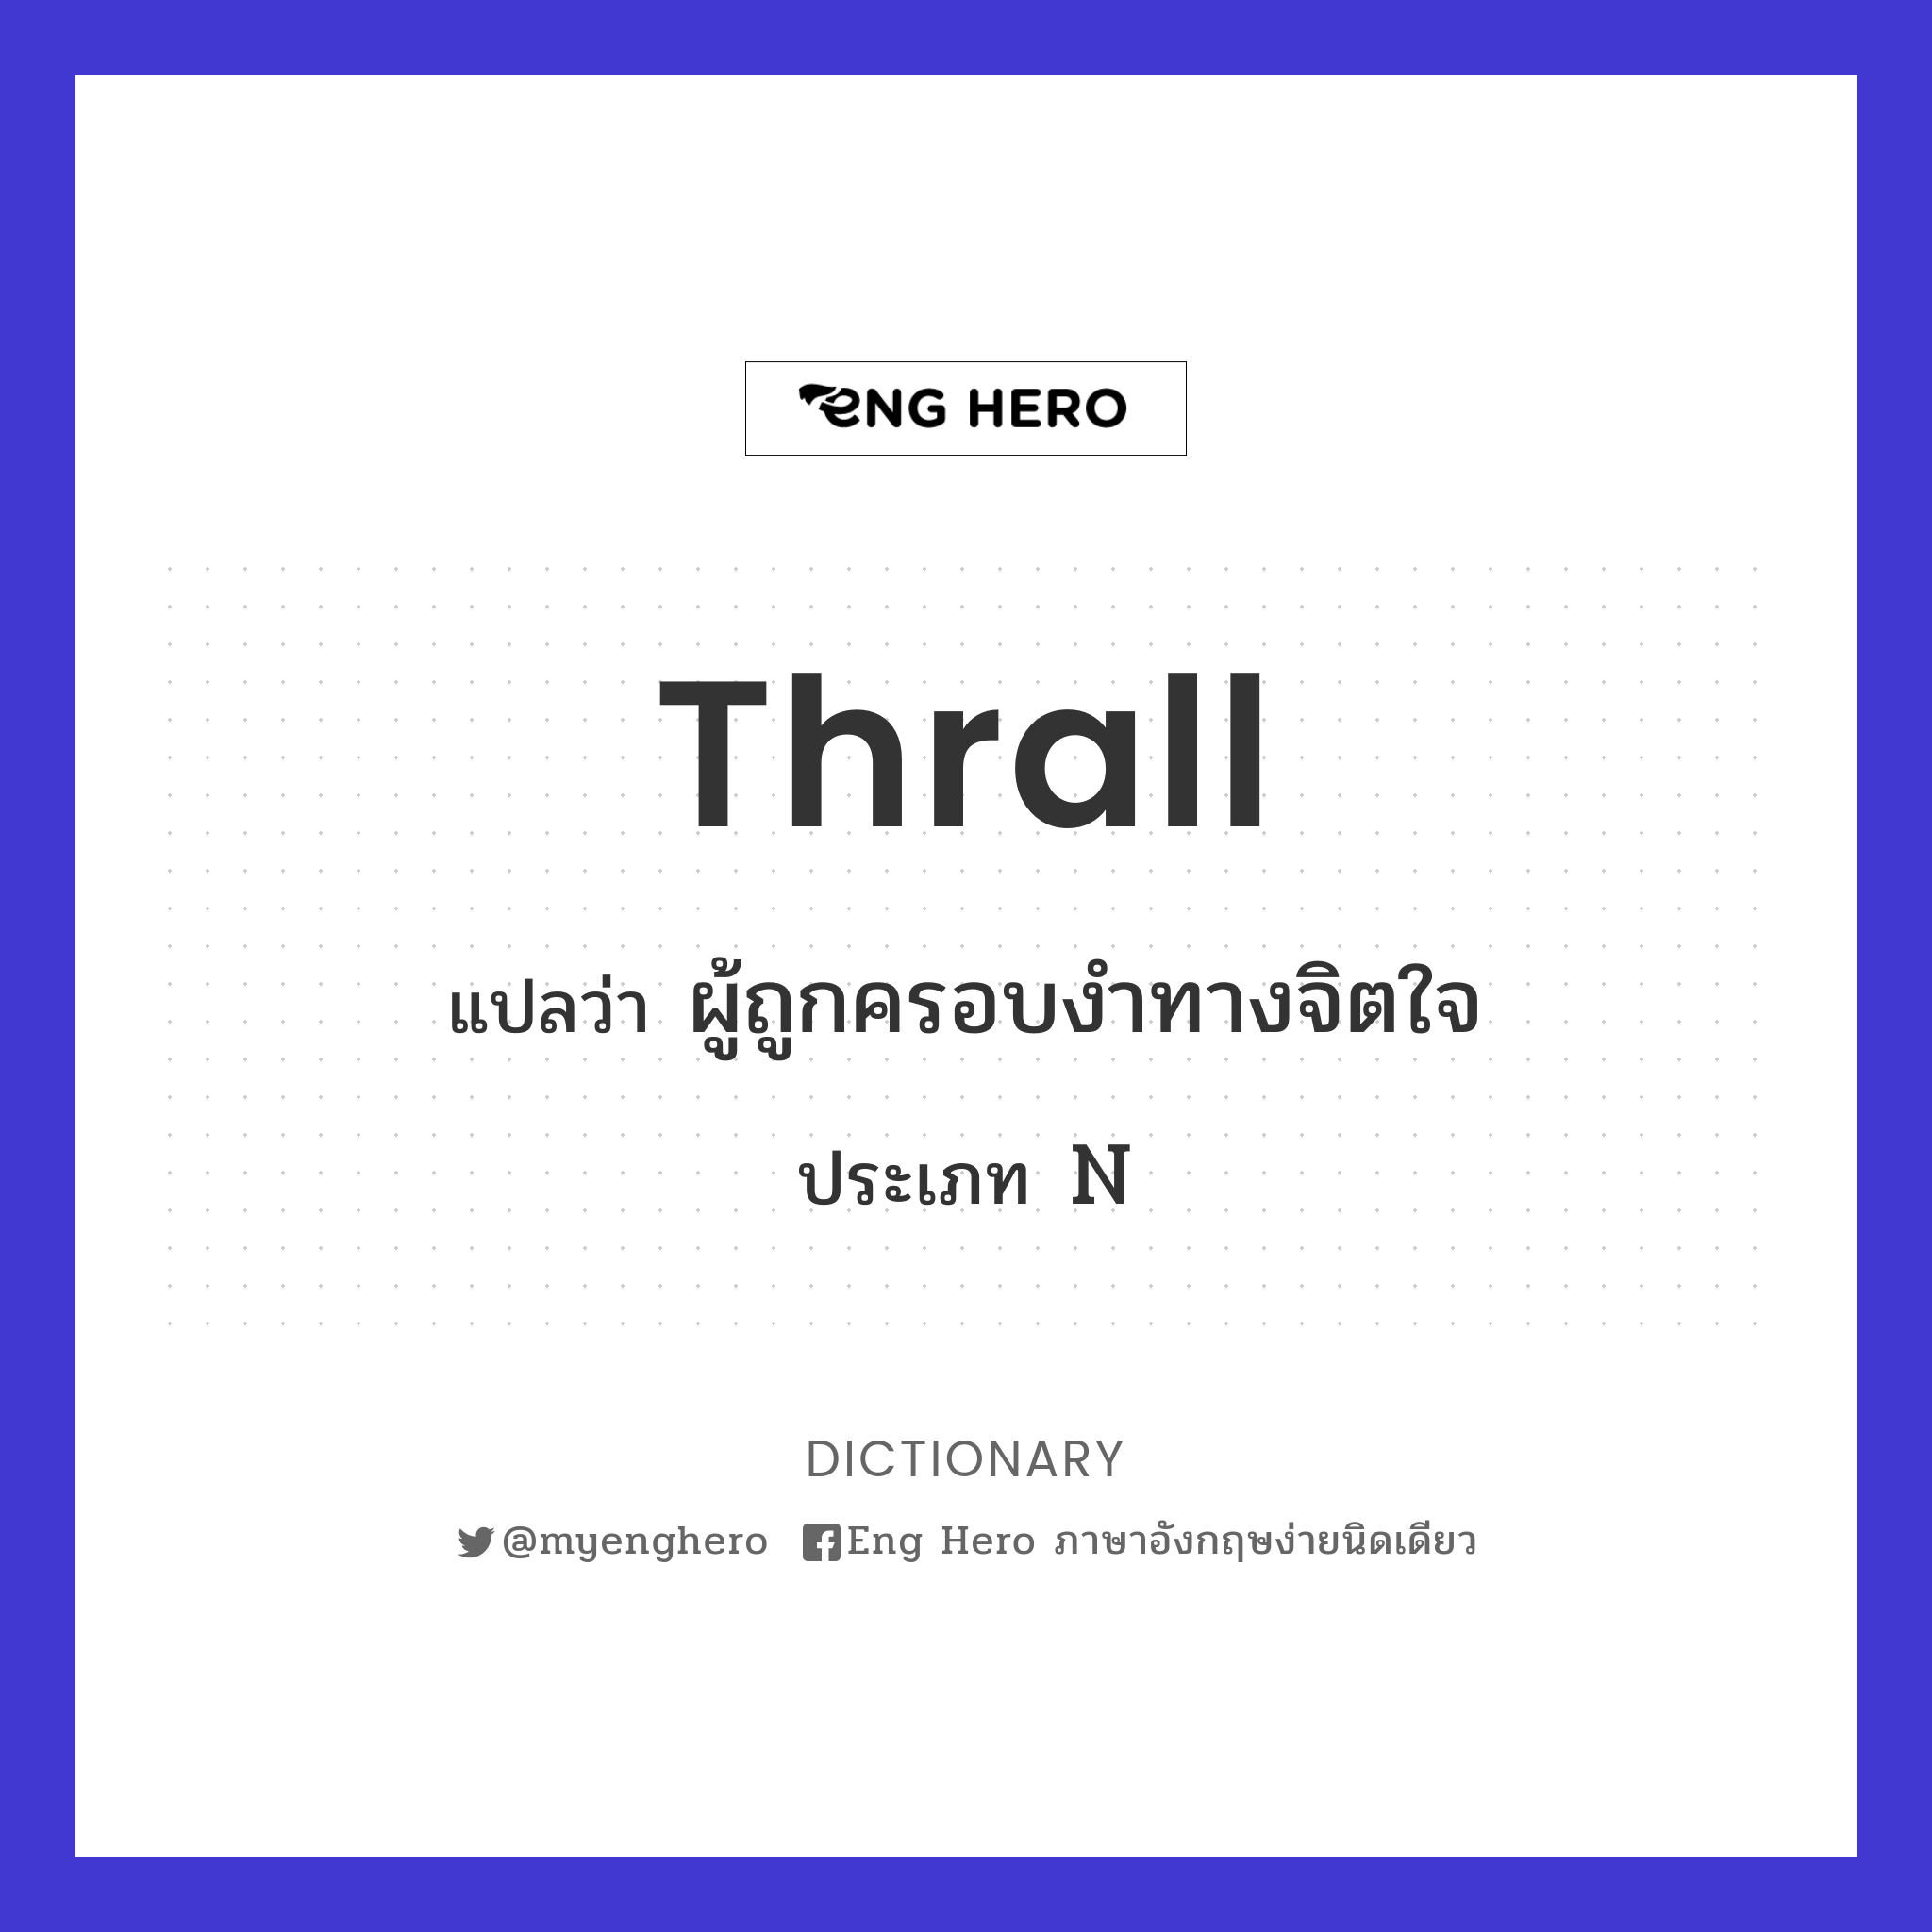 thrall